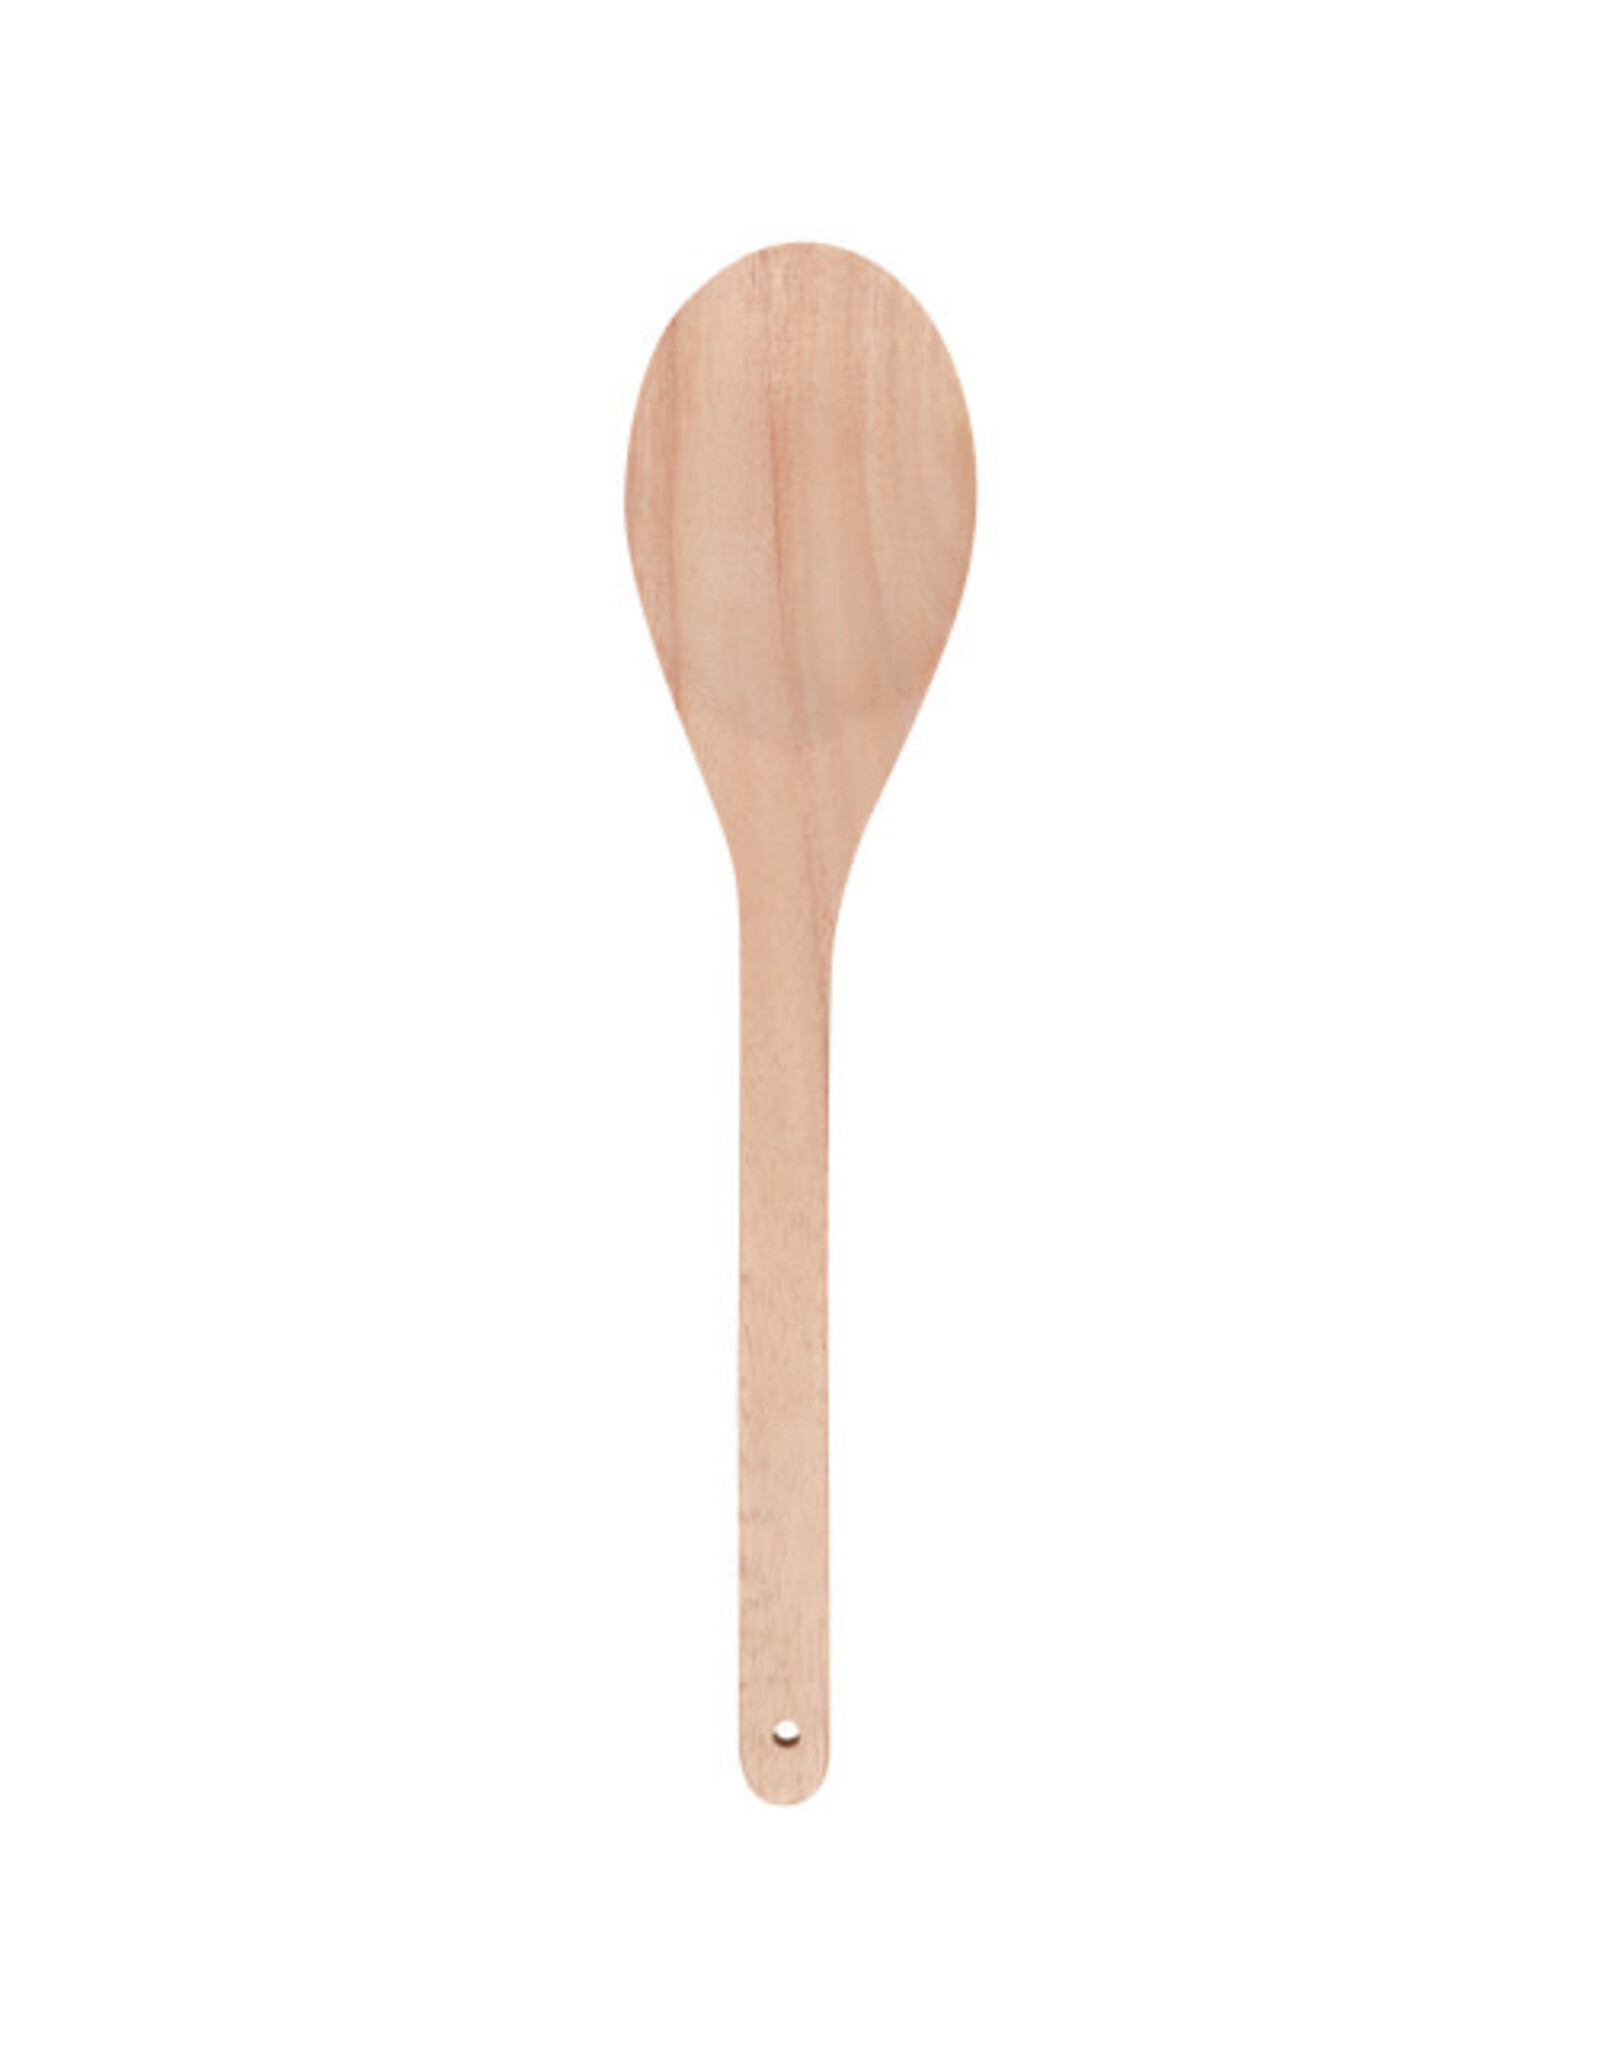 Neem Wood Spoon